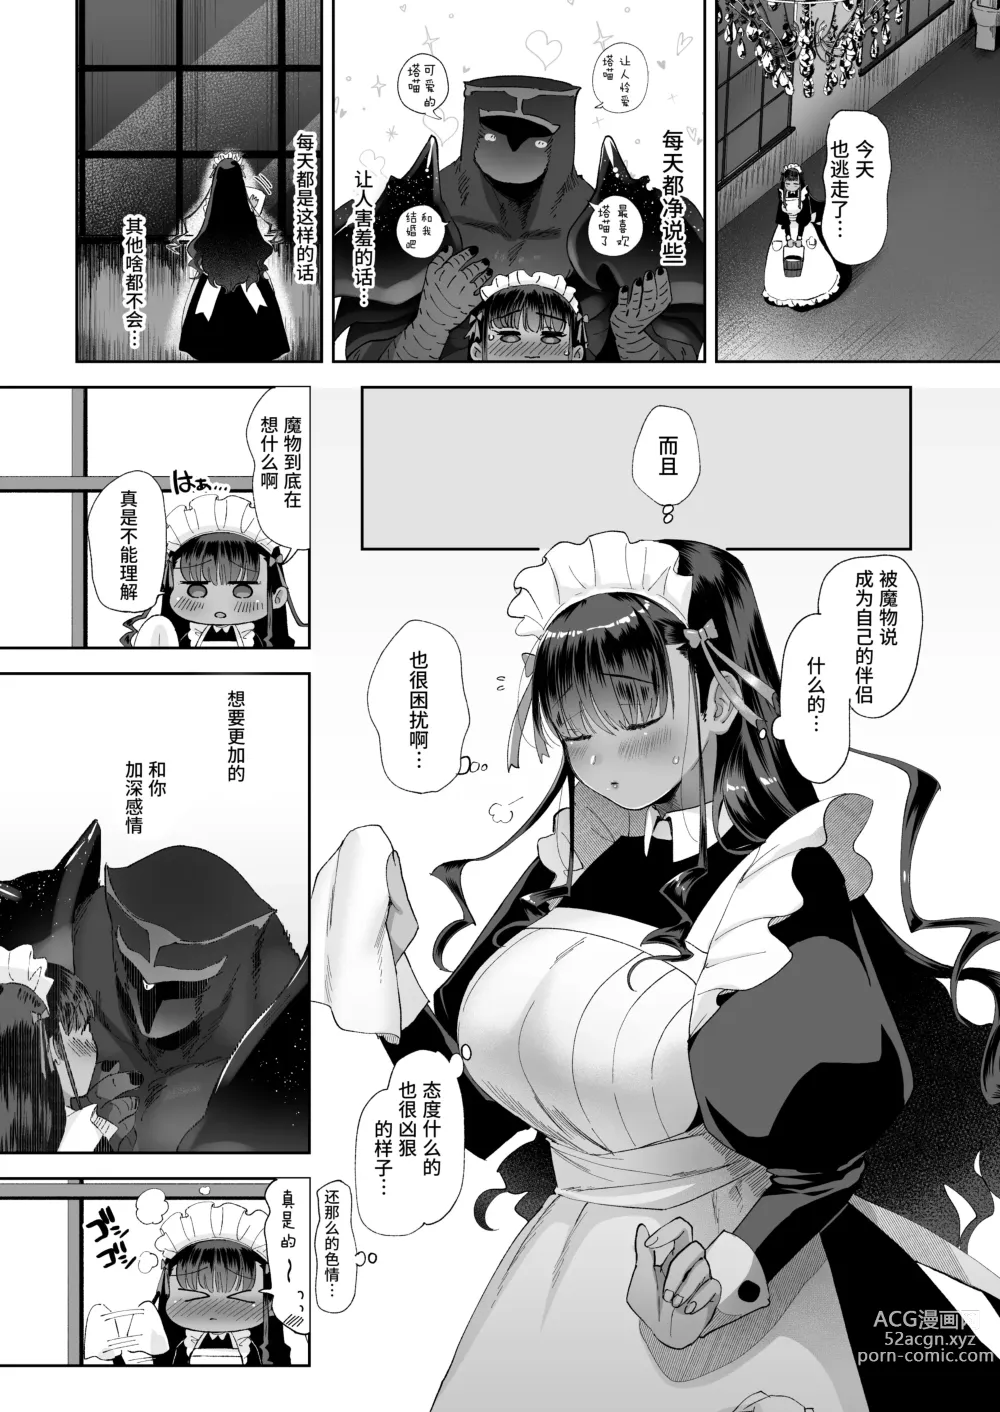 Page 5 of manga 亲吻绝对不行哦?